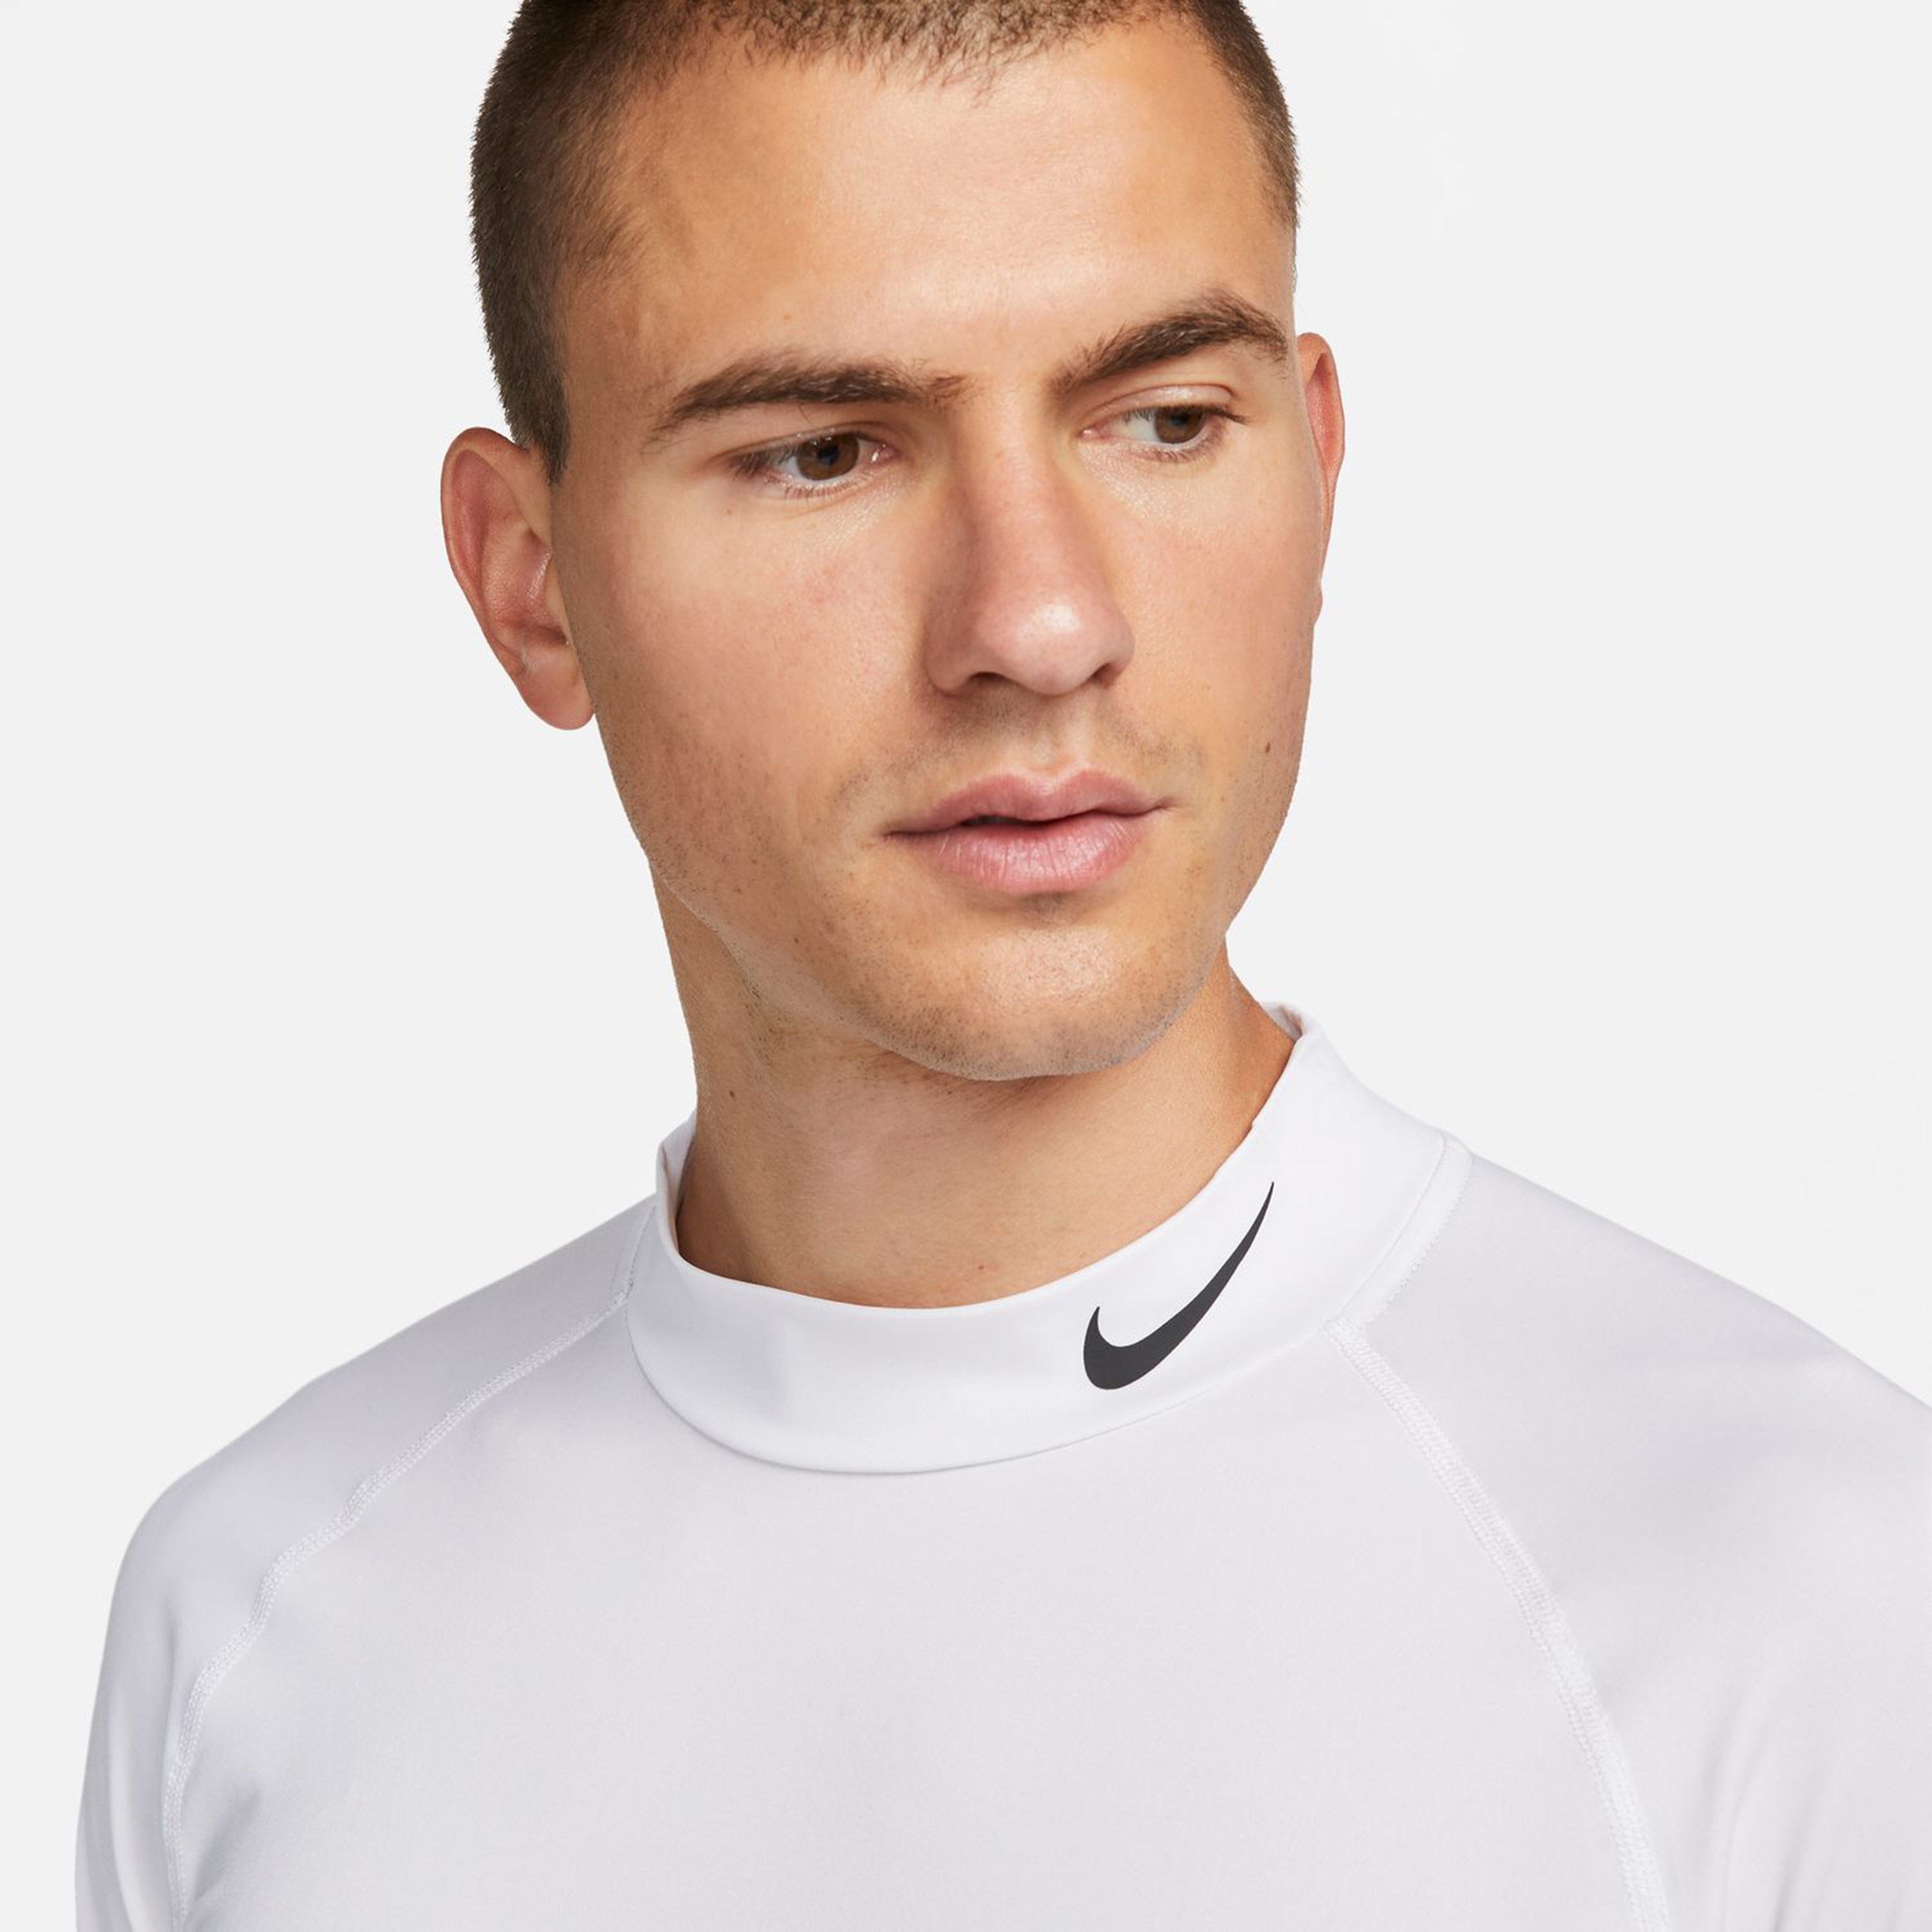 Buy Nike Dri-Fit Long Sleeve Men White online | Tennis Point COM